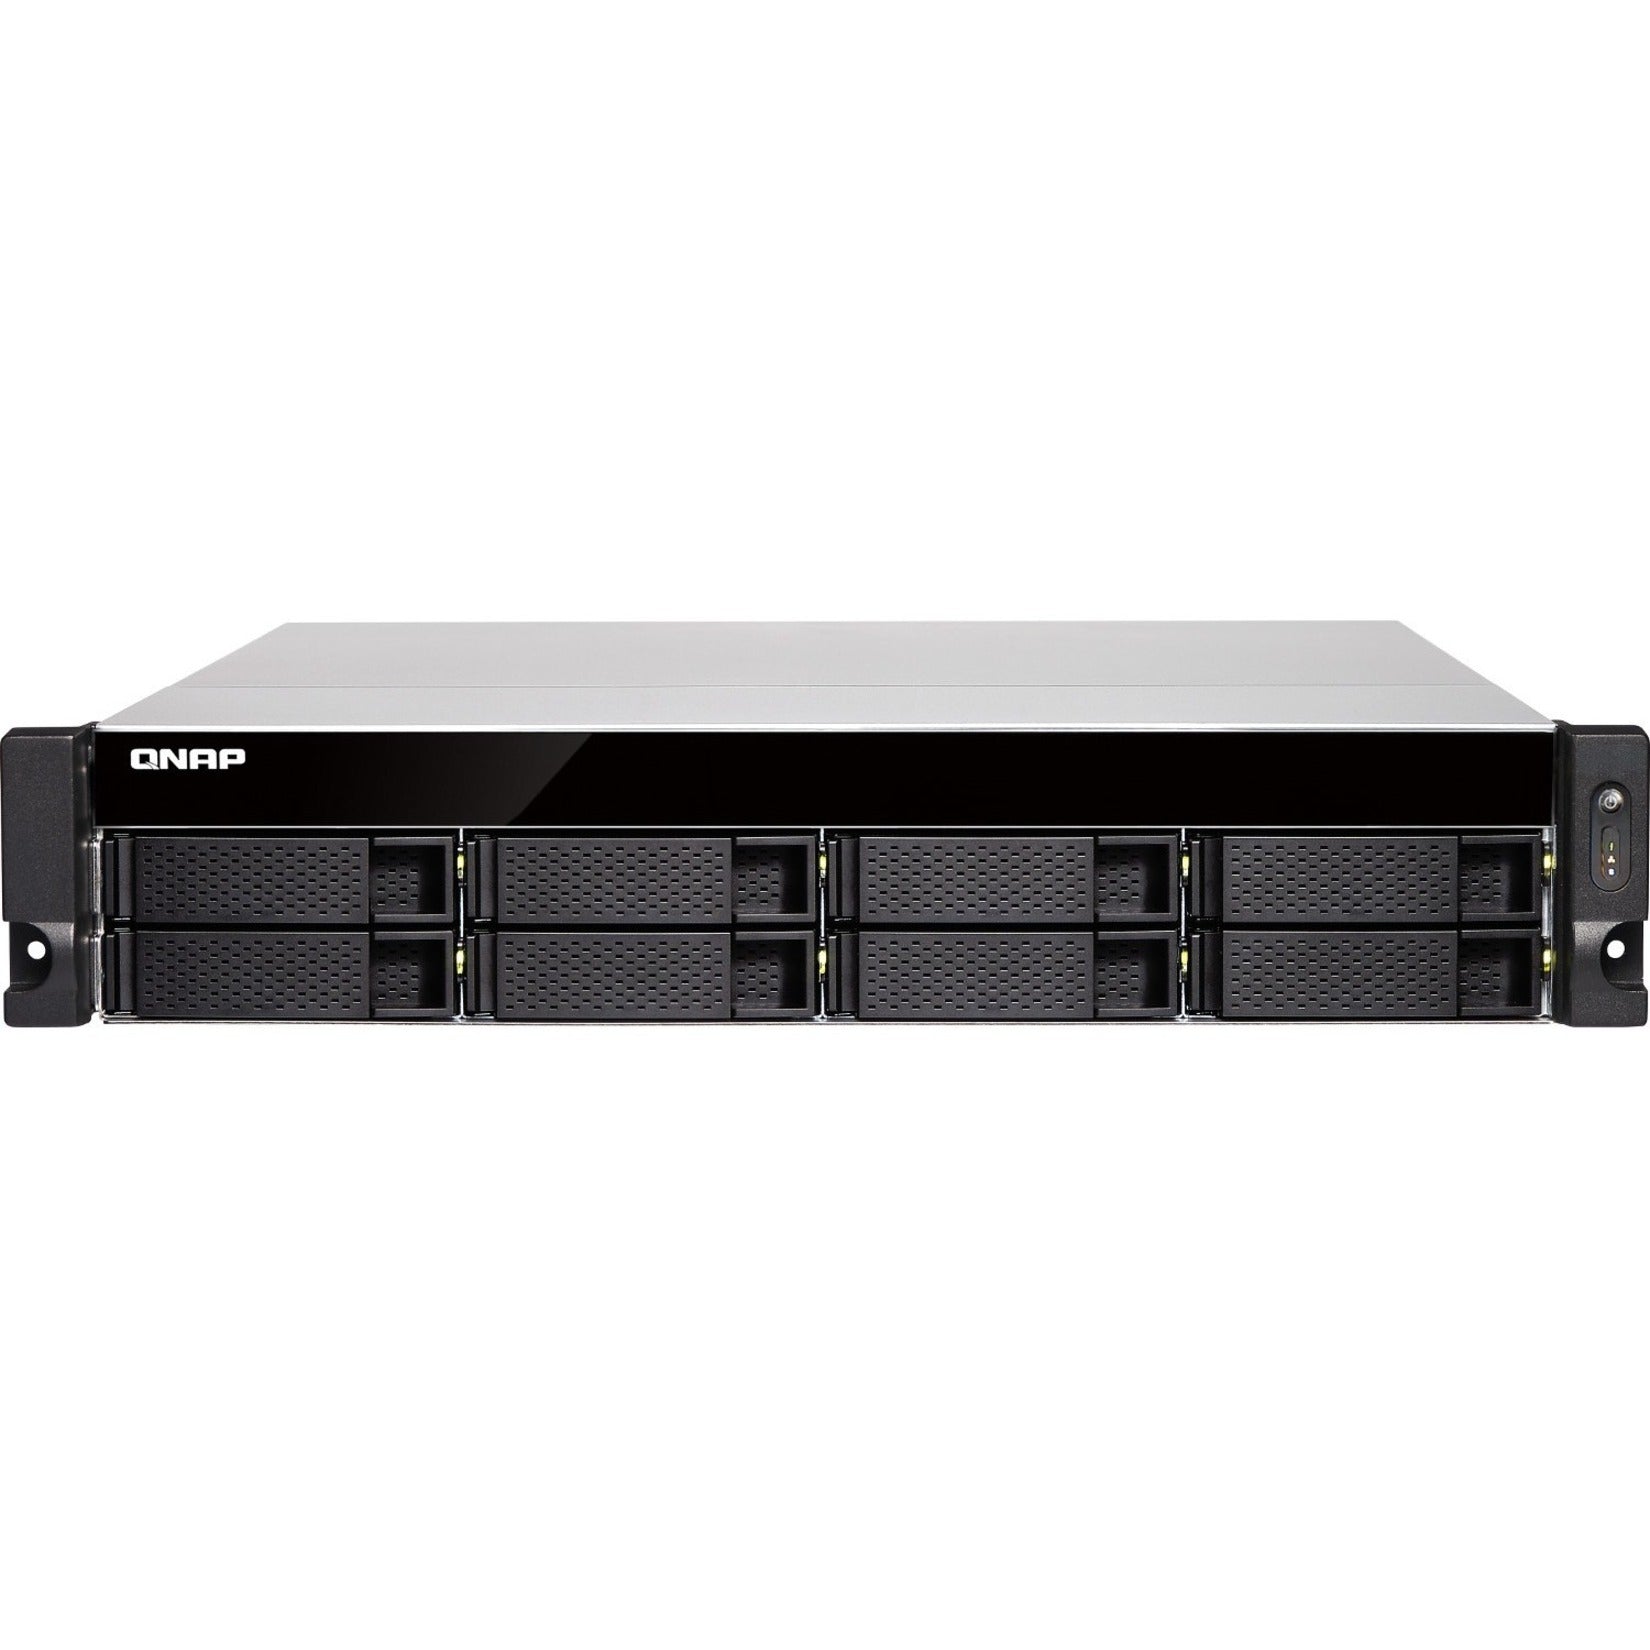 QNAP TS-877XU-RP-3600-8G SAN/NAS Storage System (TS-877XU-RP-36008GUS), Ryzen 5 3600, 8GB RAM, 8-Bay, 10GbE, 2U Rackmount